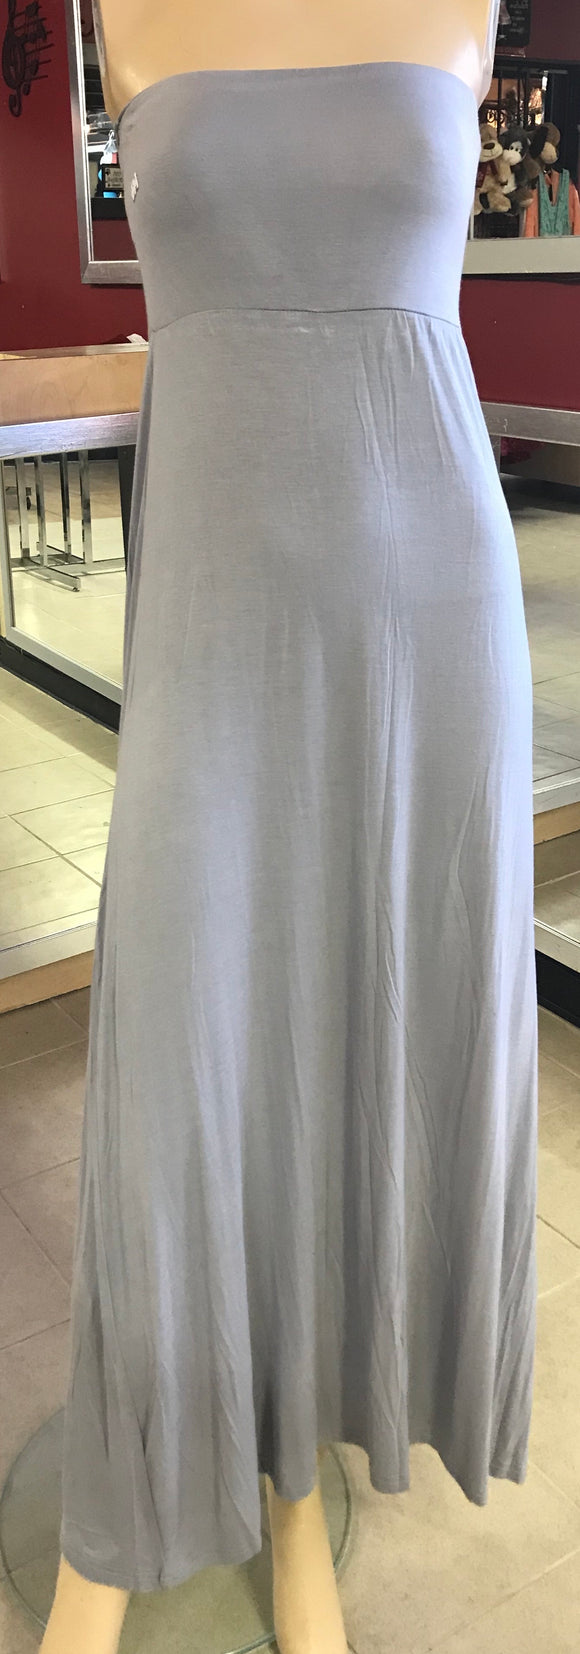 Long Grey Skirt